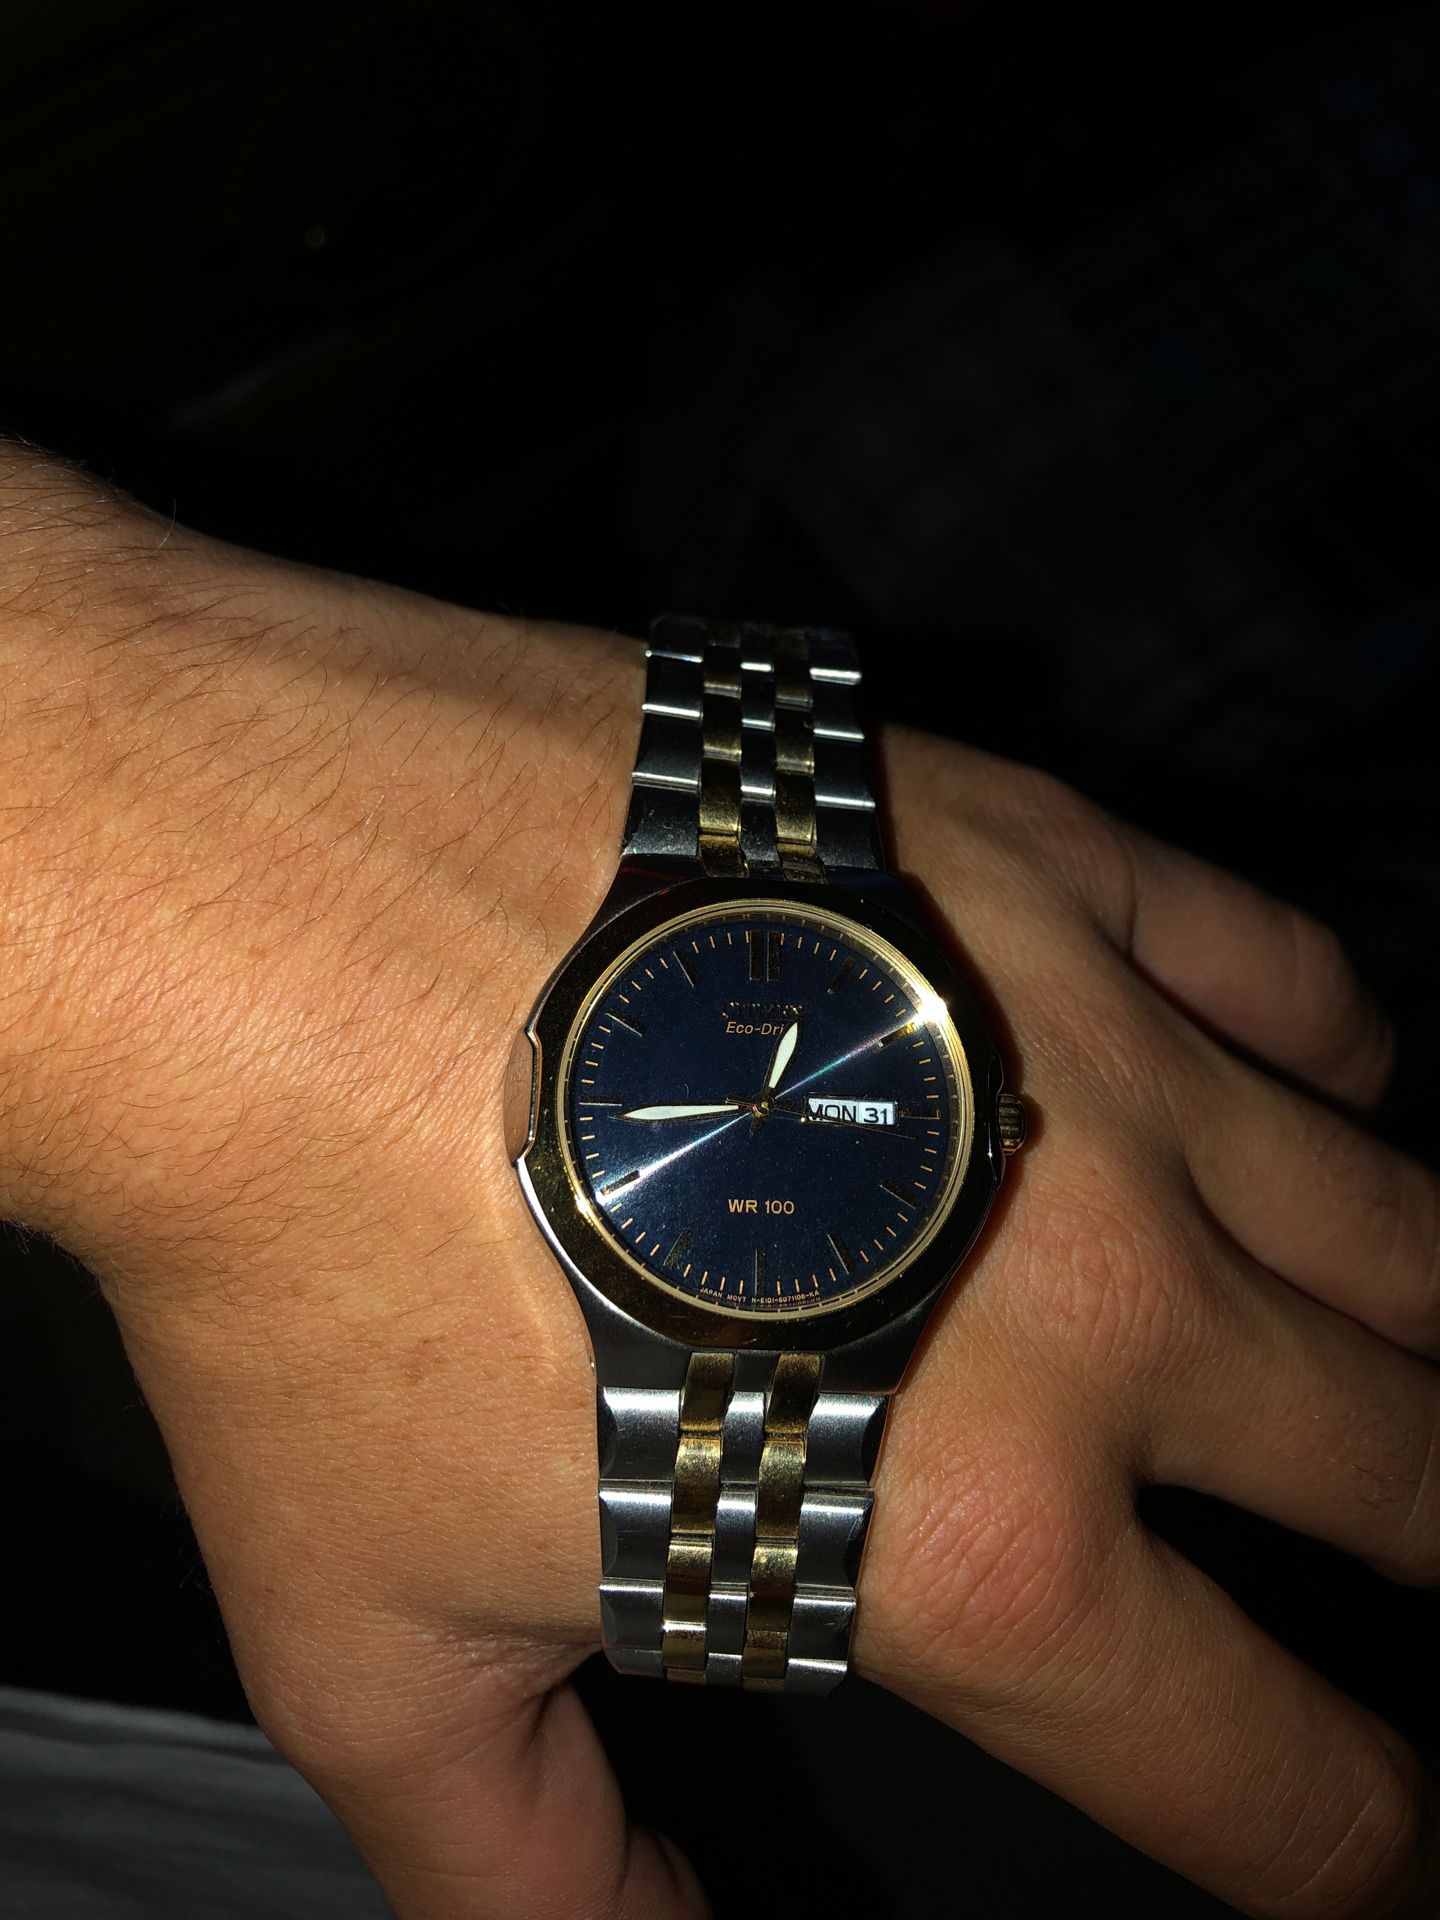 Citizen Eco-Drive WR100 wrist watch